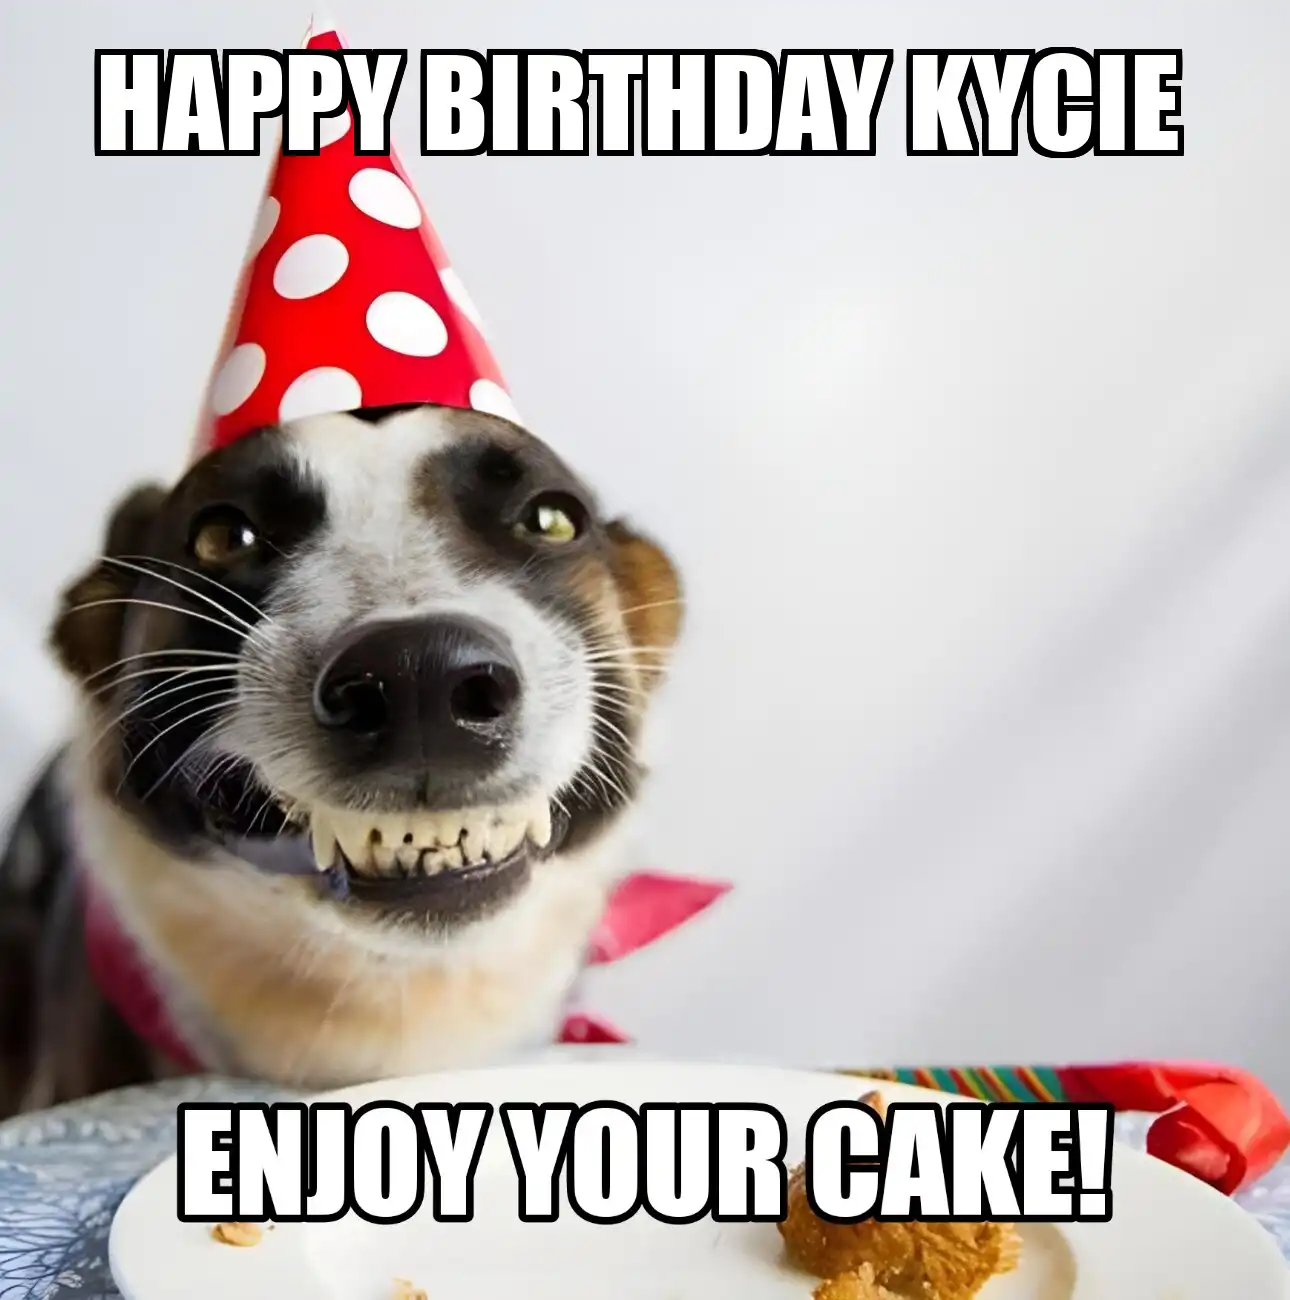 Happy Birthday Kycie Enjoy Your Cake Dog Meme